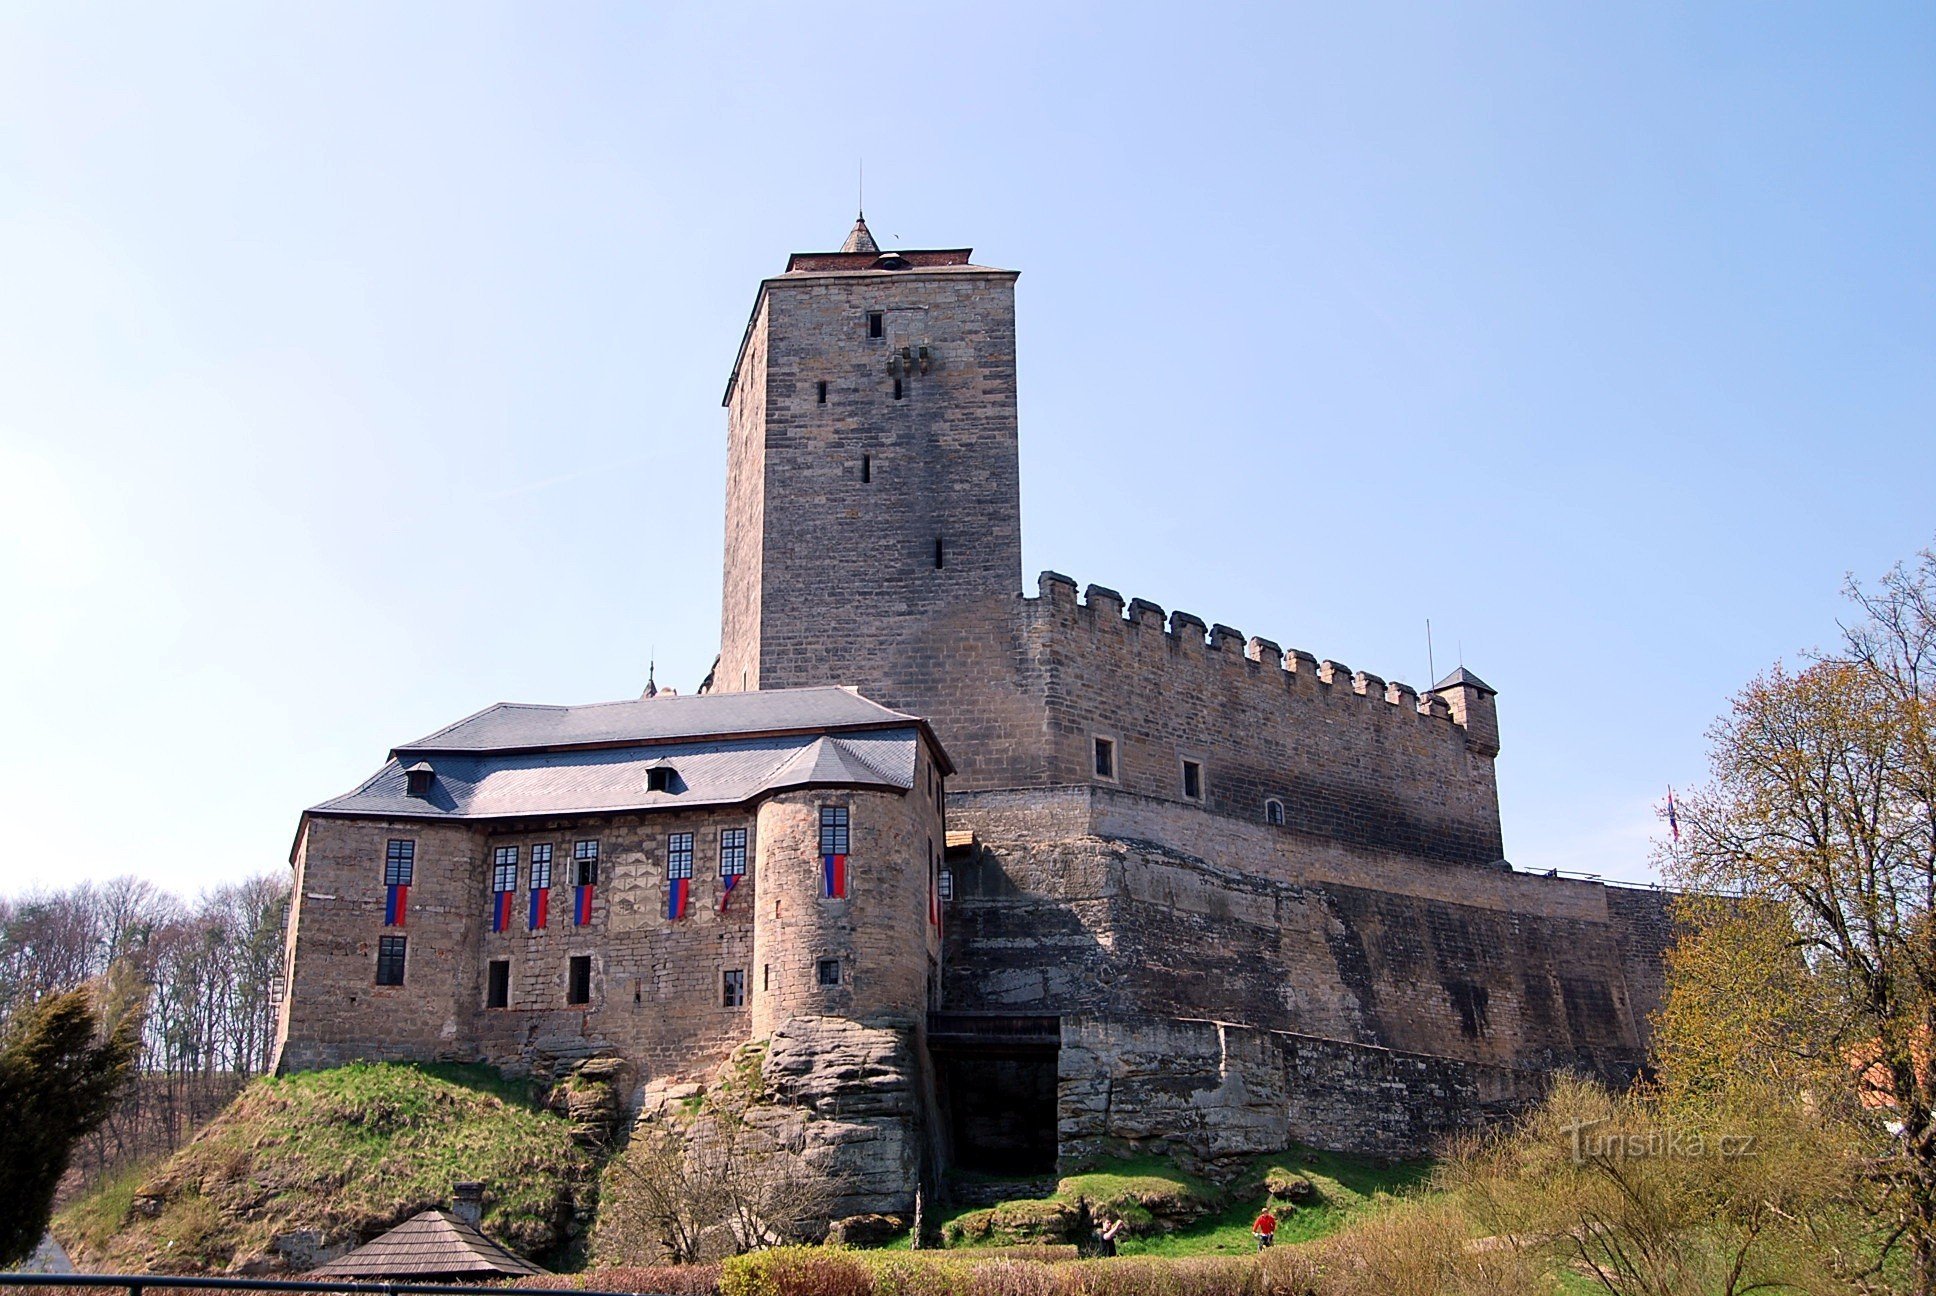 Visit to Kost Castle